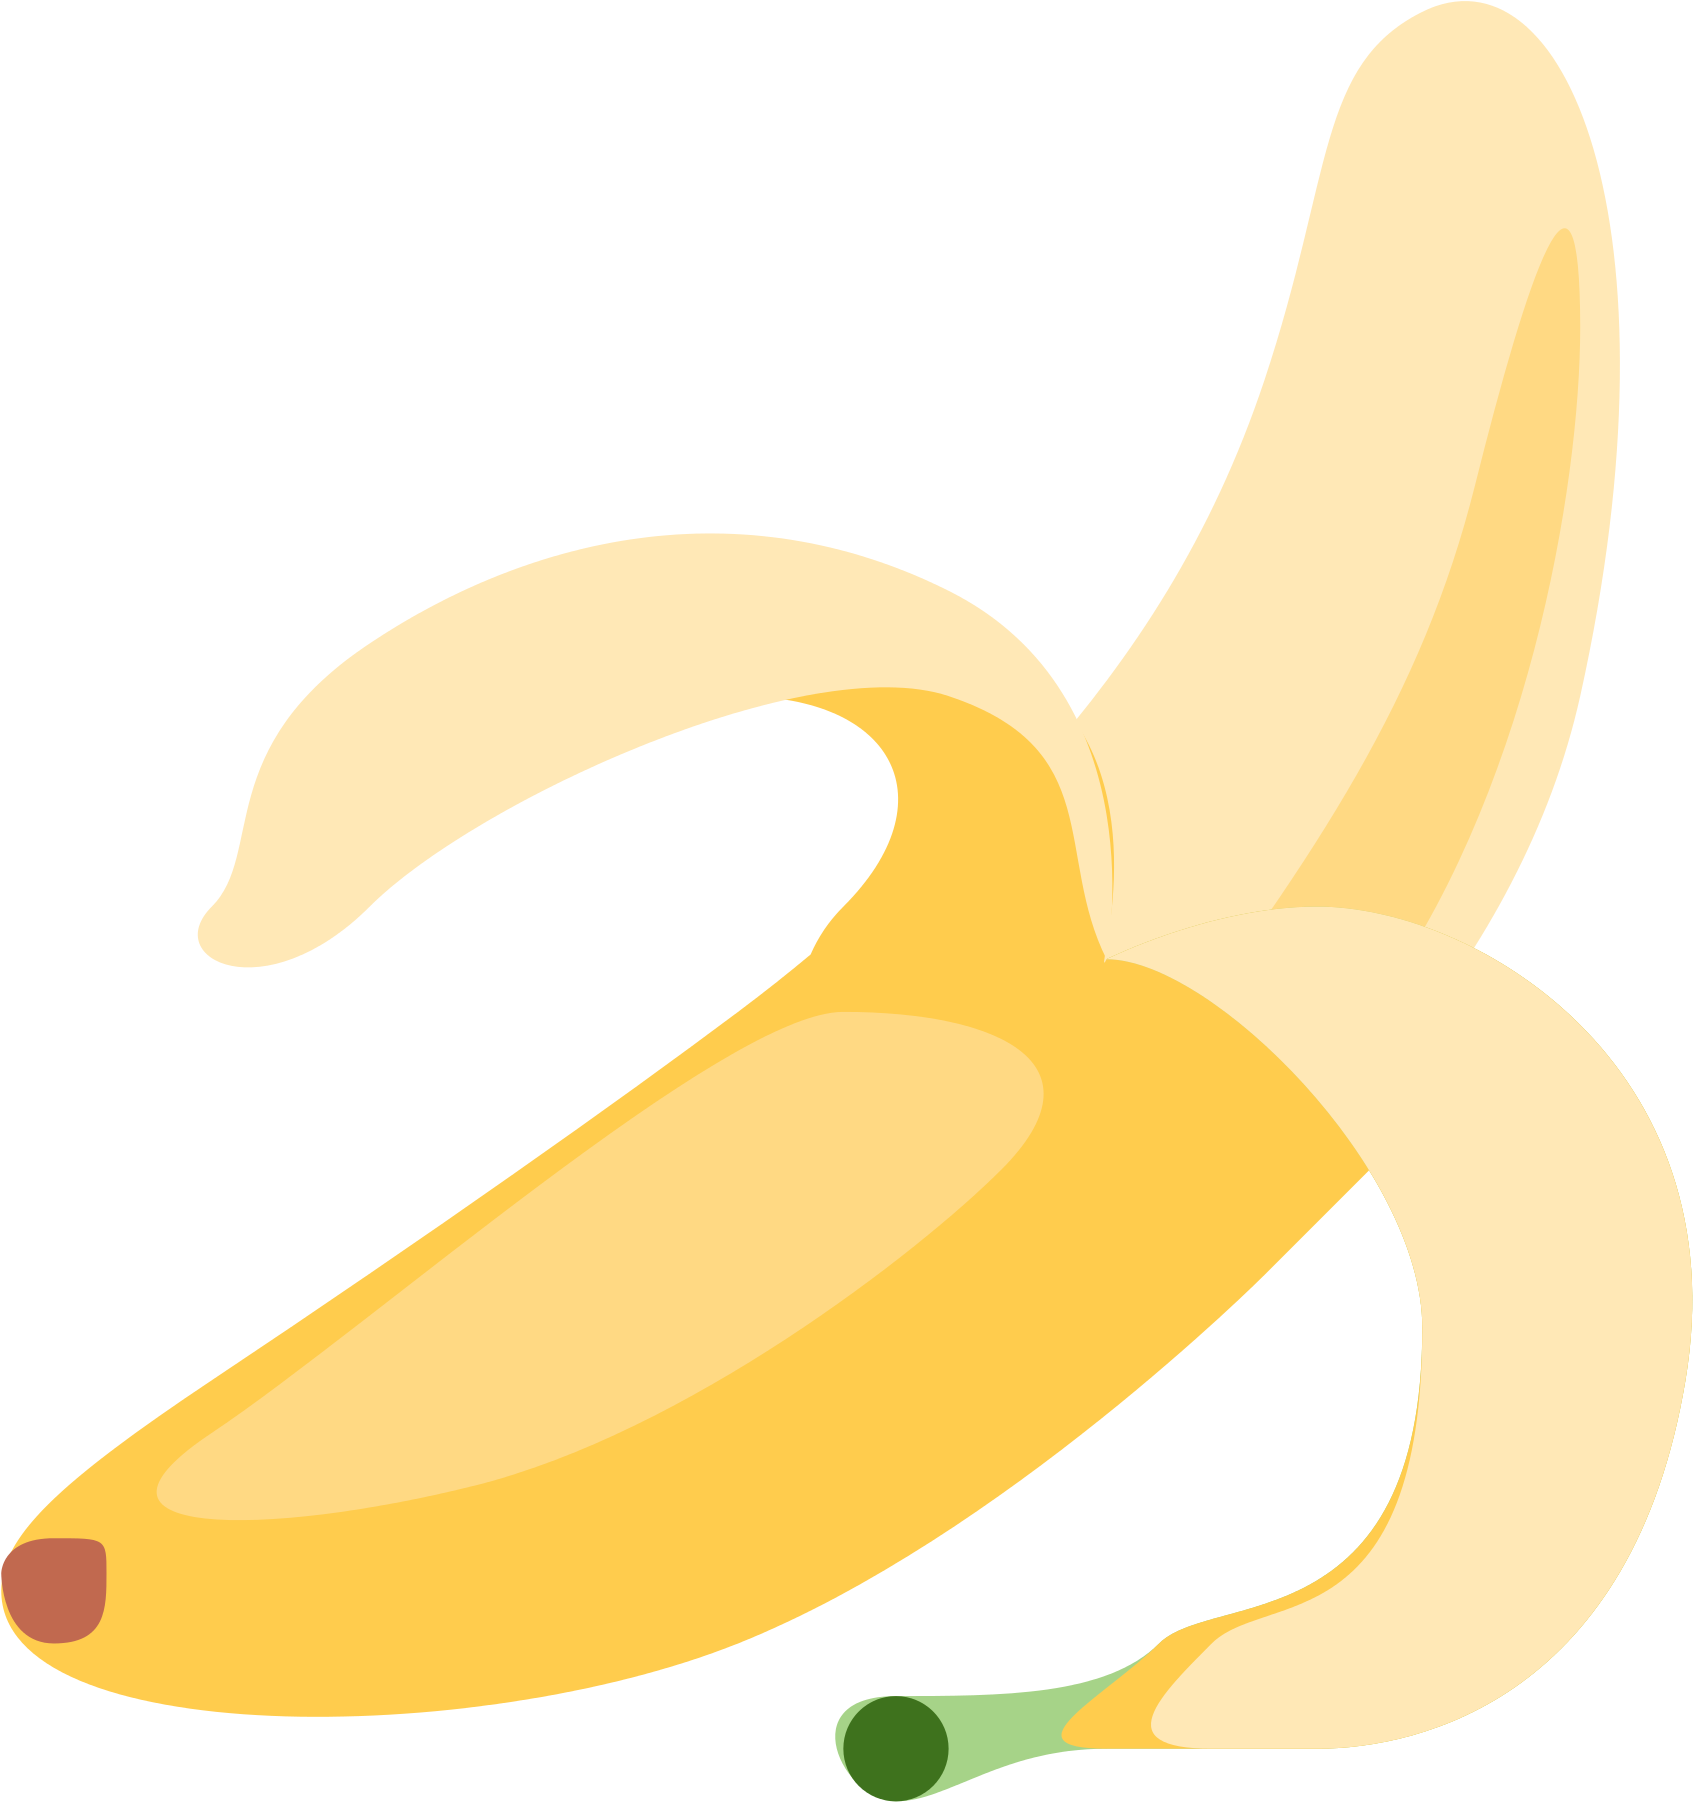 Open - Discord Banana Emoji (2000x2000)